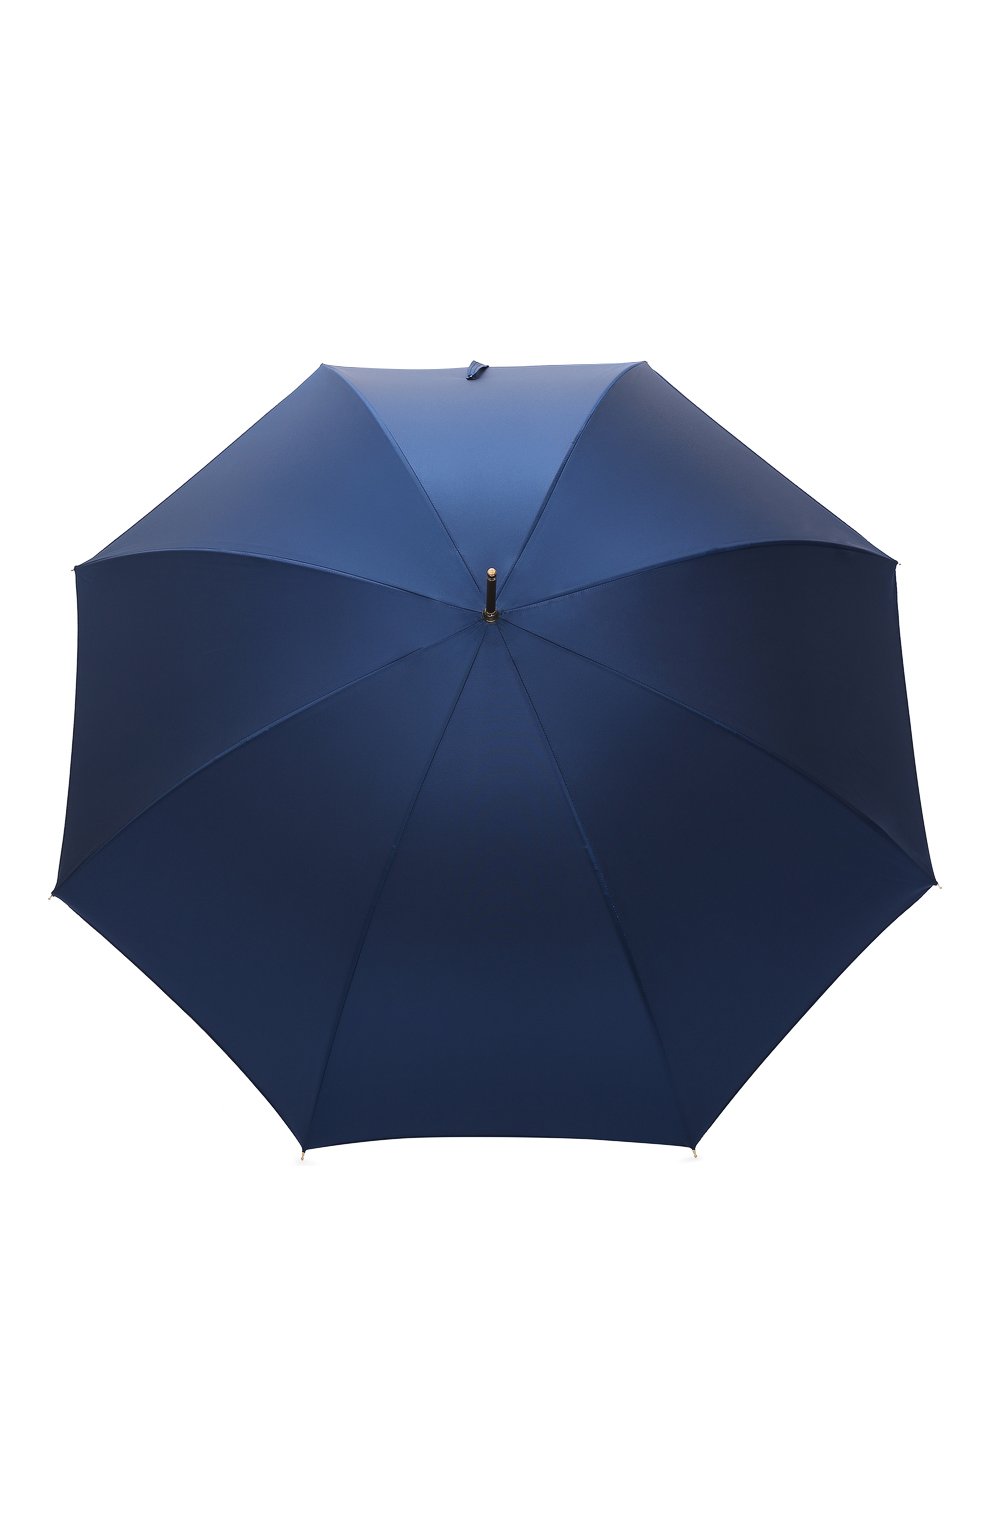 Мужской зонт-трость PASOTTI OMBRELLI темно-синего цвета, арт. 479/RAS0 0XF0RD/8/K68 | Фото 1 (Материал: Текстиль, Синтетический материал, Металл)